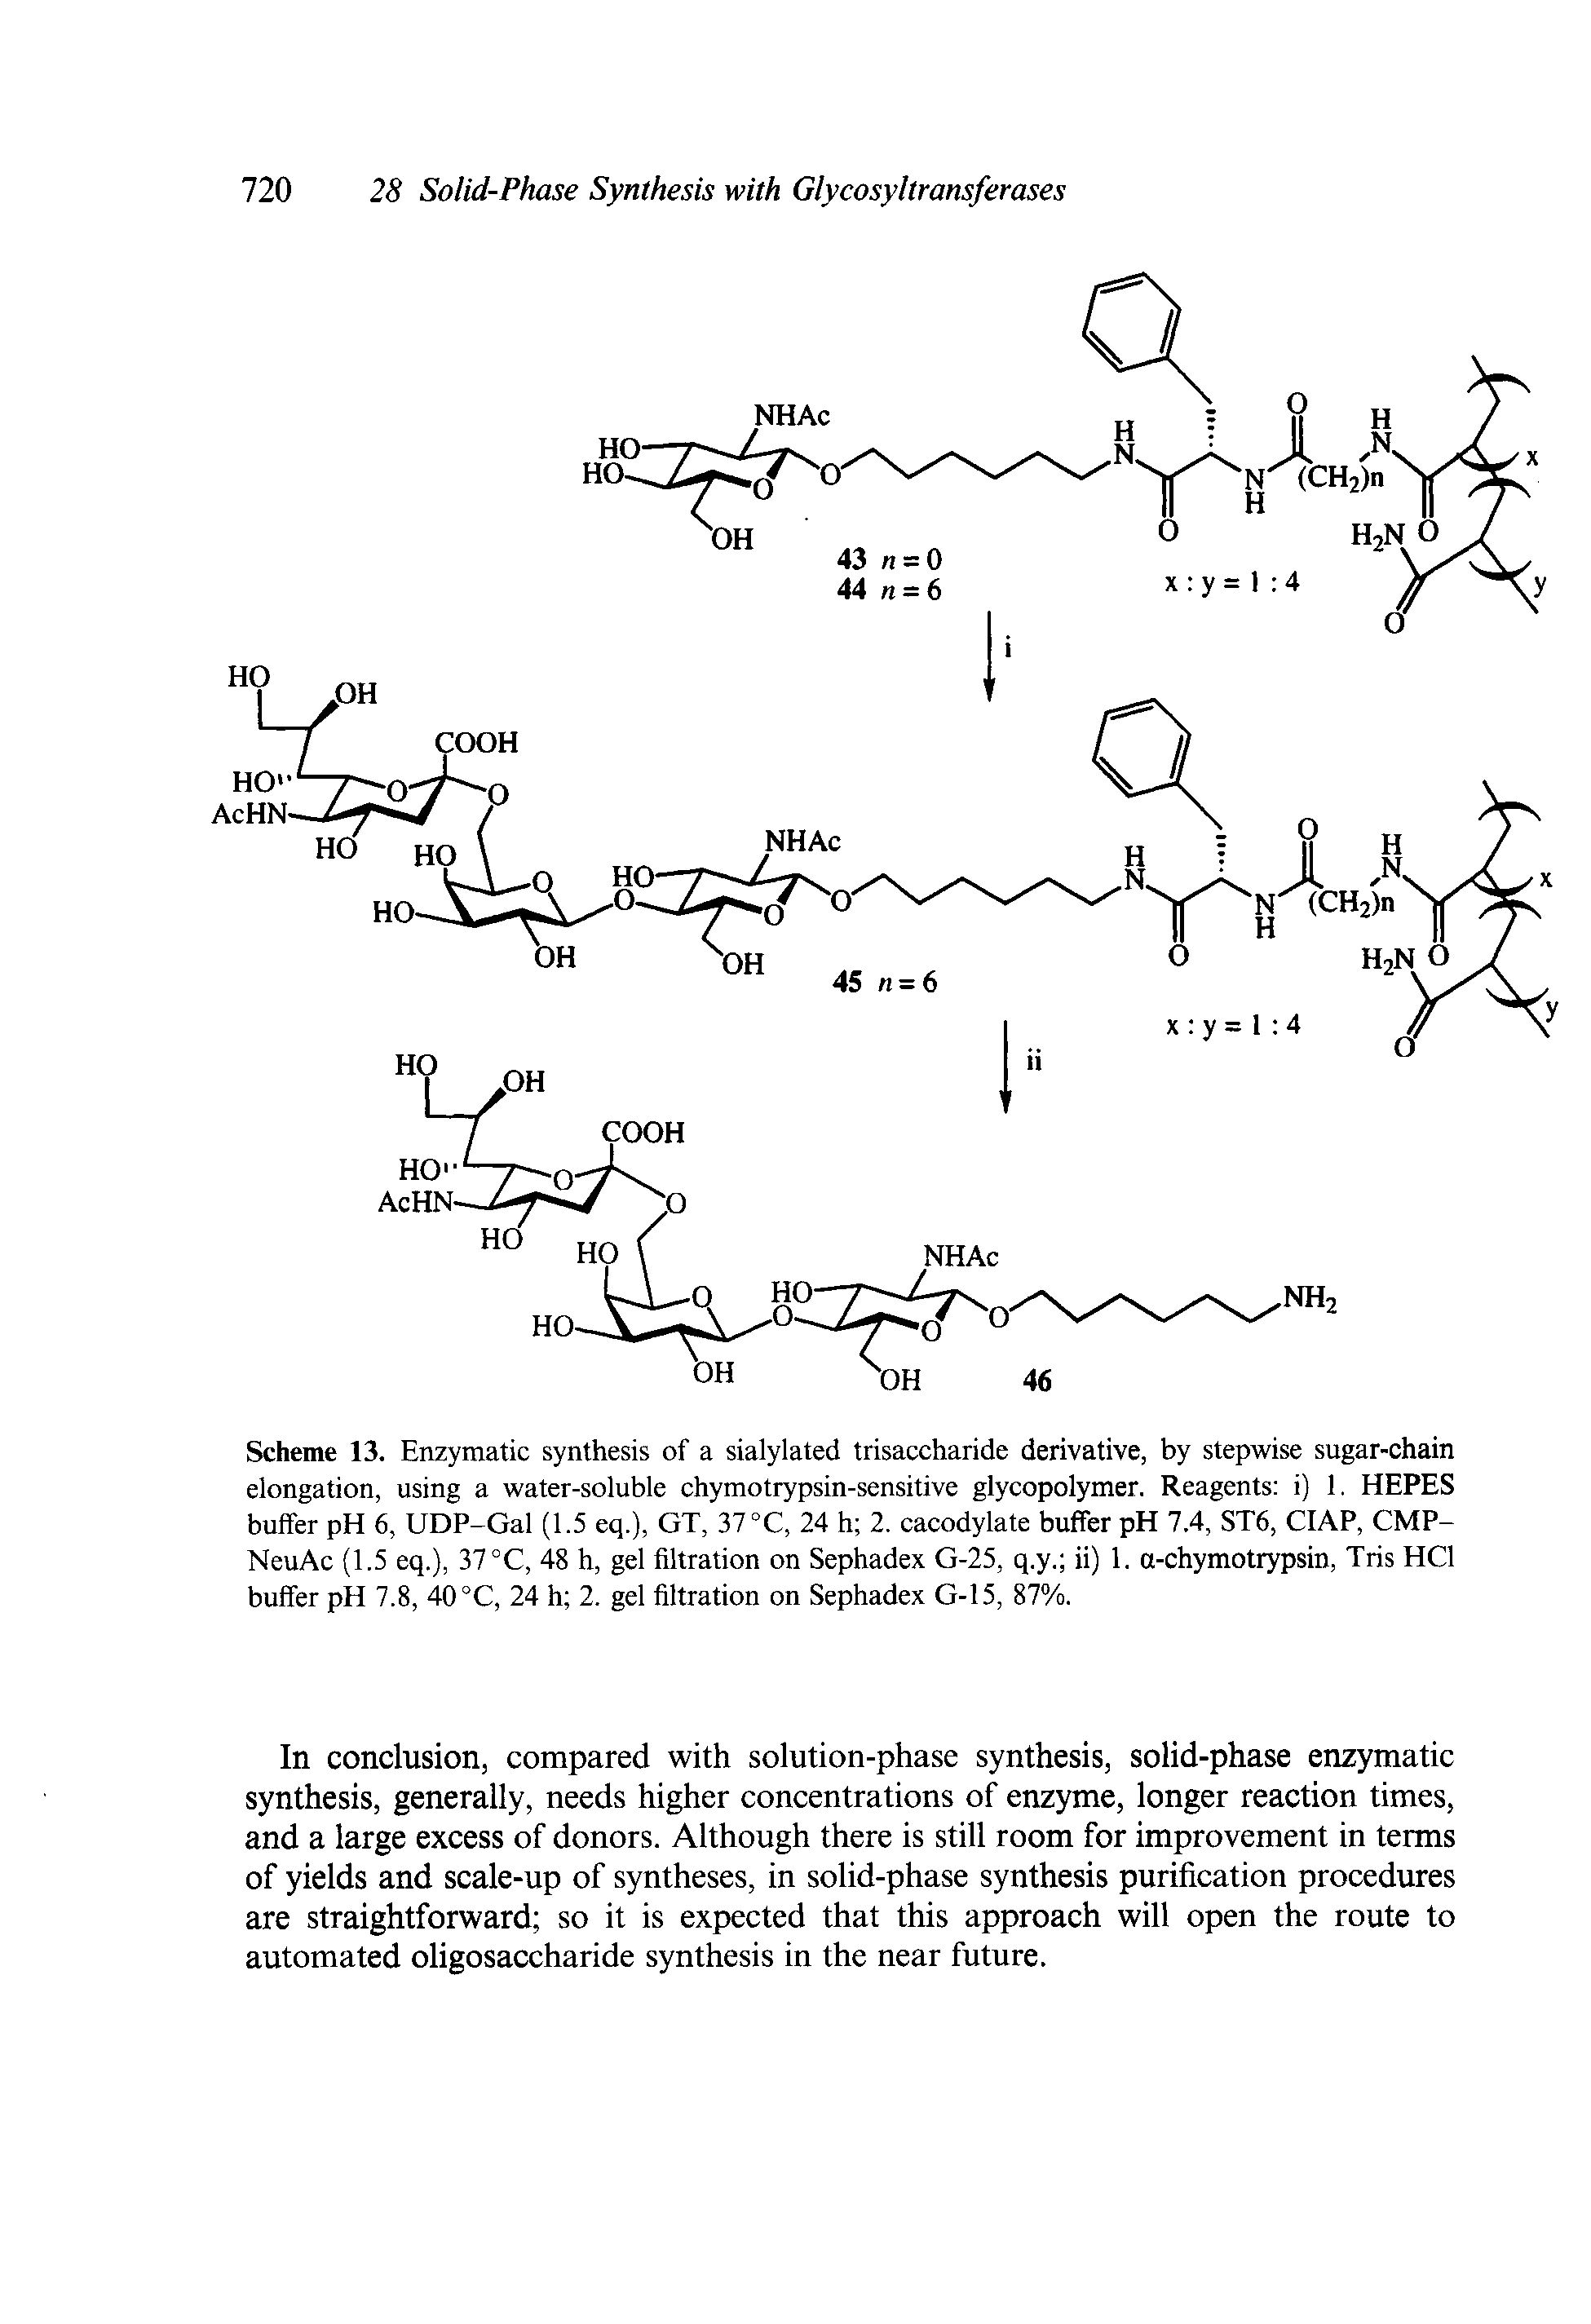 Scheme 13. Enzymatic synthesis of a sialylated trisaccharide derivative, by stepwise sugar-chain elongation, using a water-soluble chymotrypsin-sensitive glycopolymer. Reagents i) 1. HEPES buffer pH 6, UDP-Gal (1.5 eq.), GT, 37 °C, 24 h 2. cacodylate buffer pH 7.4, ST6, CIAP, CMP-NeuAc (1.5 eq.), 37°C, 48 h, gel filtration on Sephadex G-25, q.y. ii) 1. a-chymotrypsin, Tris HCl buffer pH 7.8, 40 °C, 24 h 2. gel filtration on Sephadex G-15, 87%.